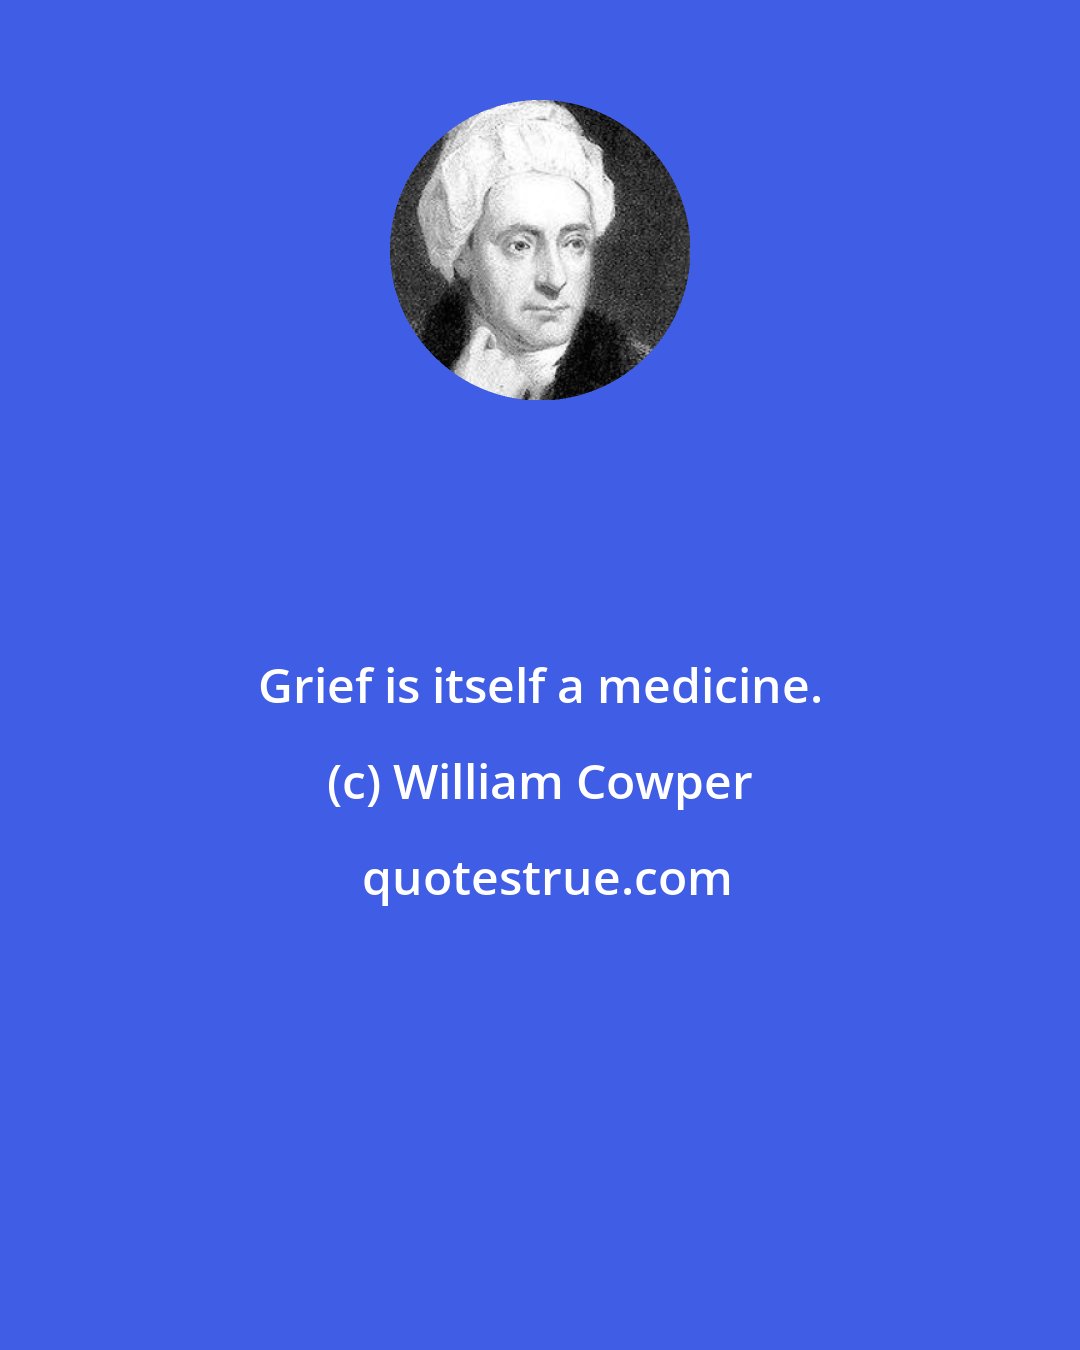 William Cowper: Grief is itself a medicine.